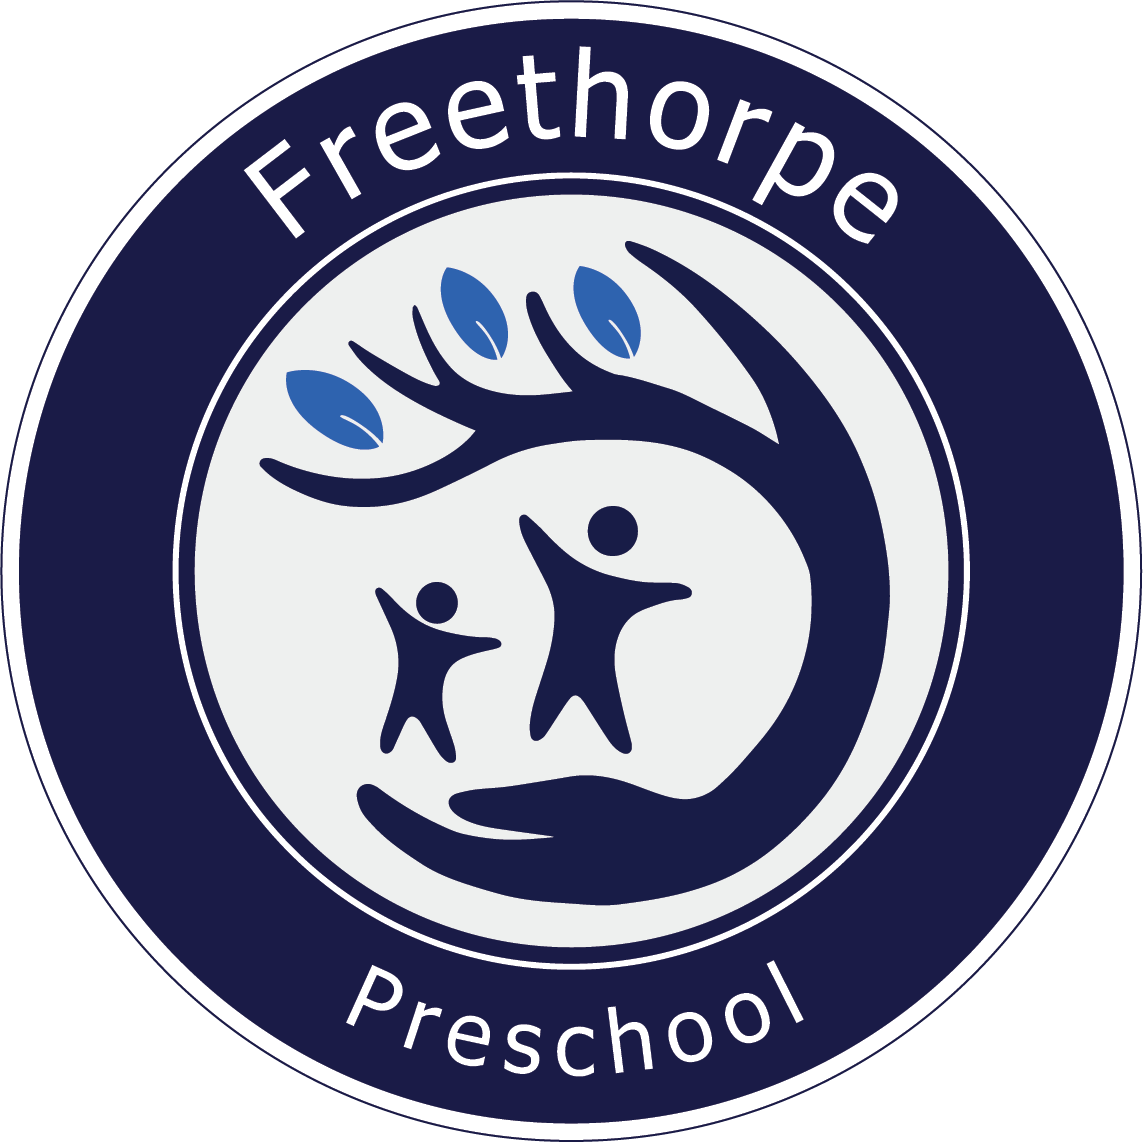 Freethorpe Preschool